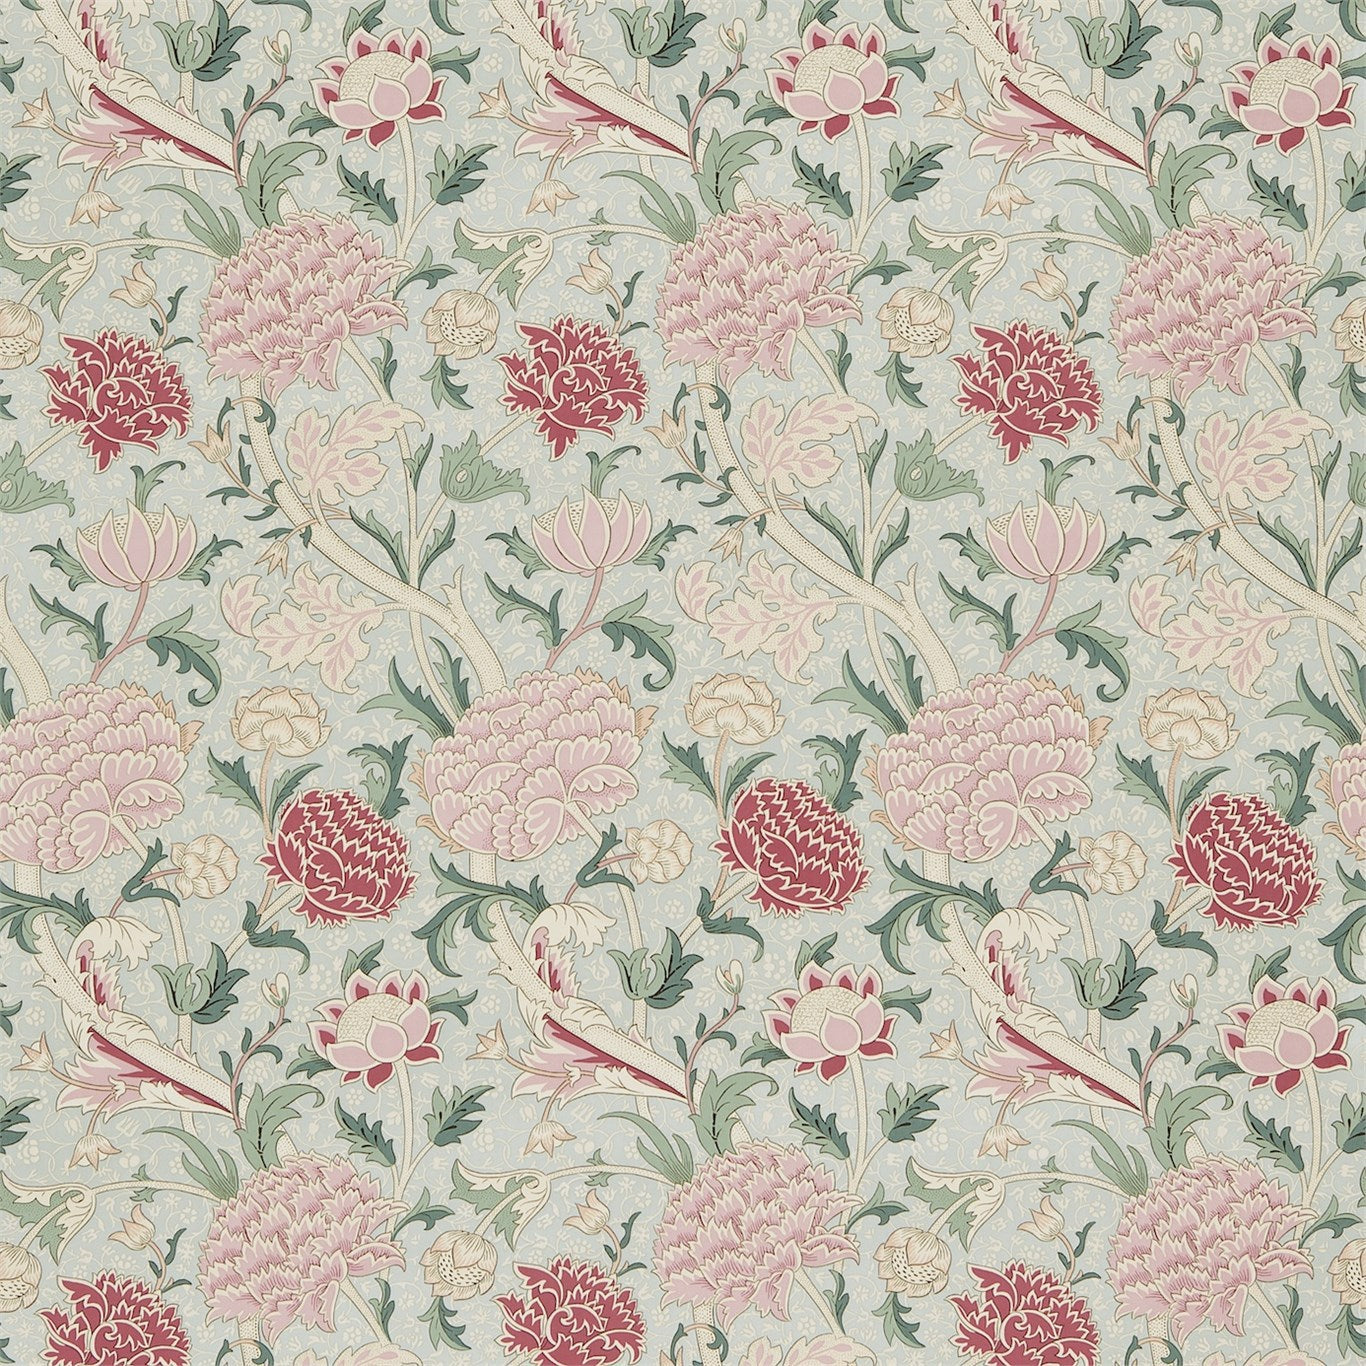 Cray Fabric by Morris & Co. - DMFPCR203 - Duckegg/Pink